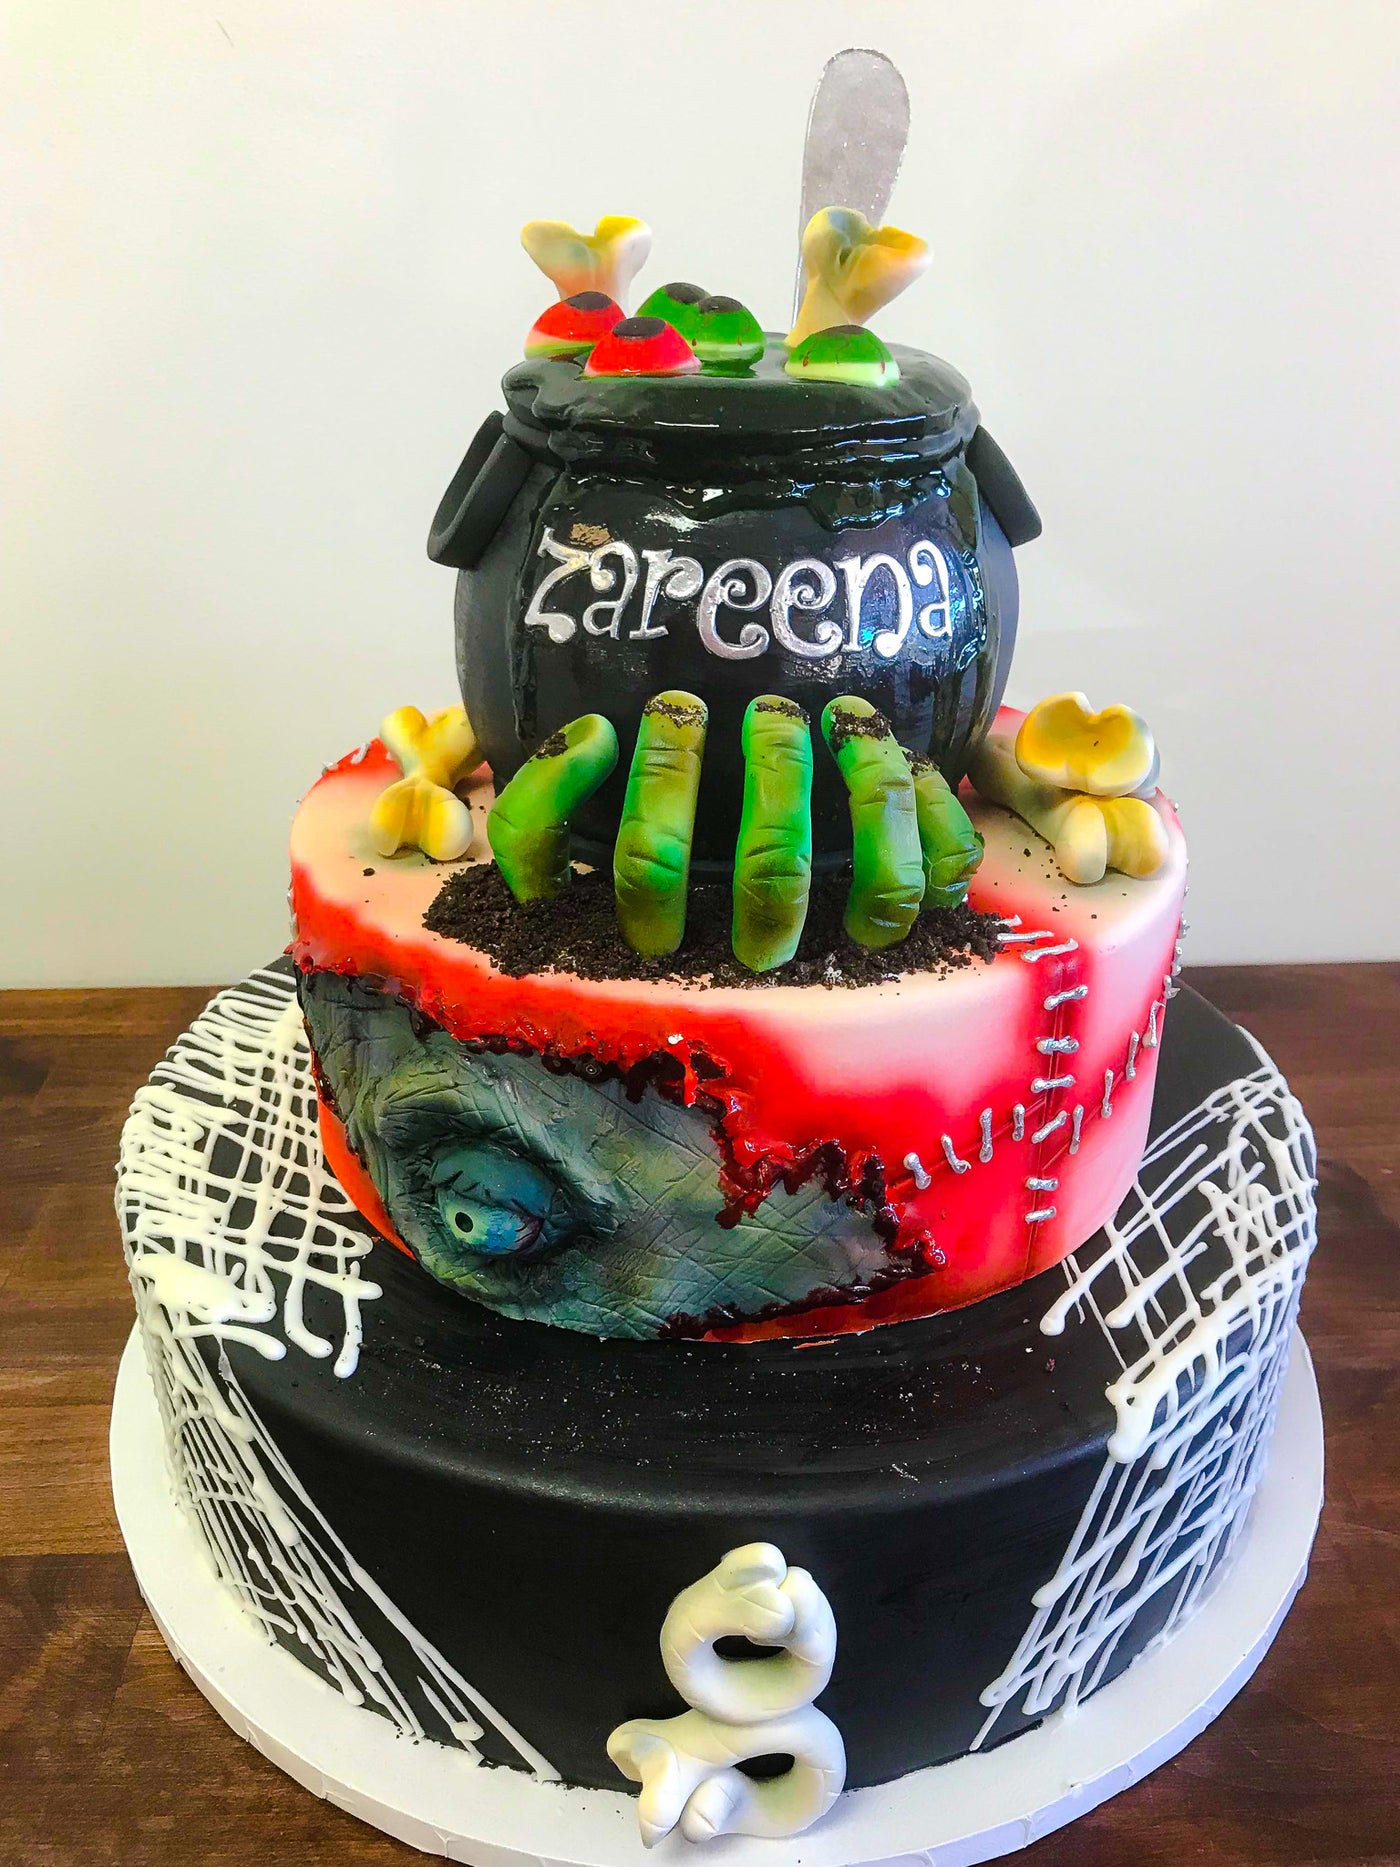 Witch cake, Zombie cake, spider cake, cauldron cake, scary, halloween design, party, vegas, best seller, trendy, favorite, boyfriend horror fan